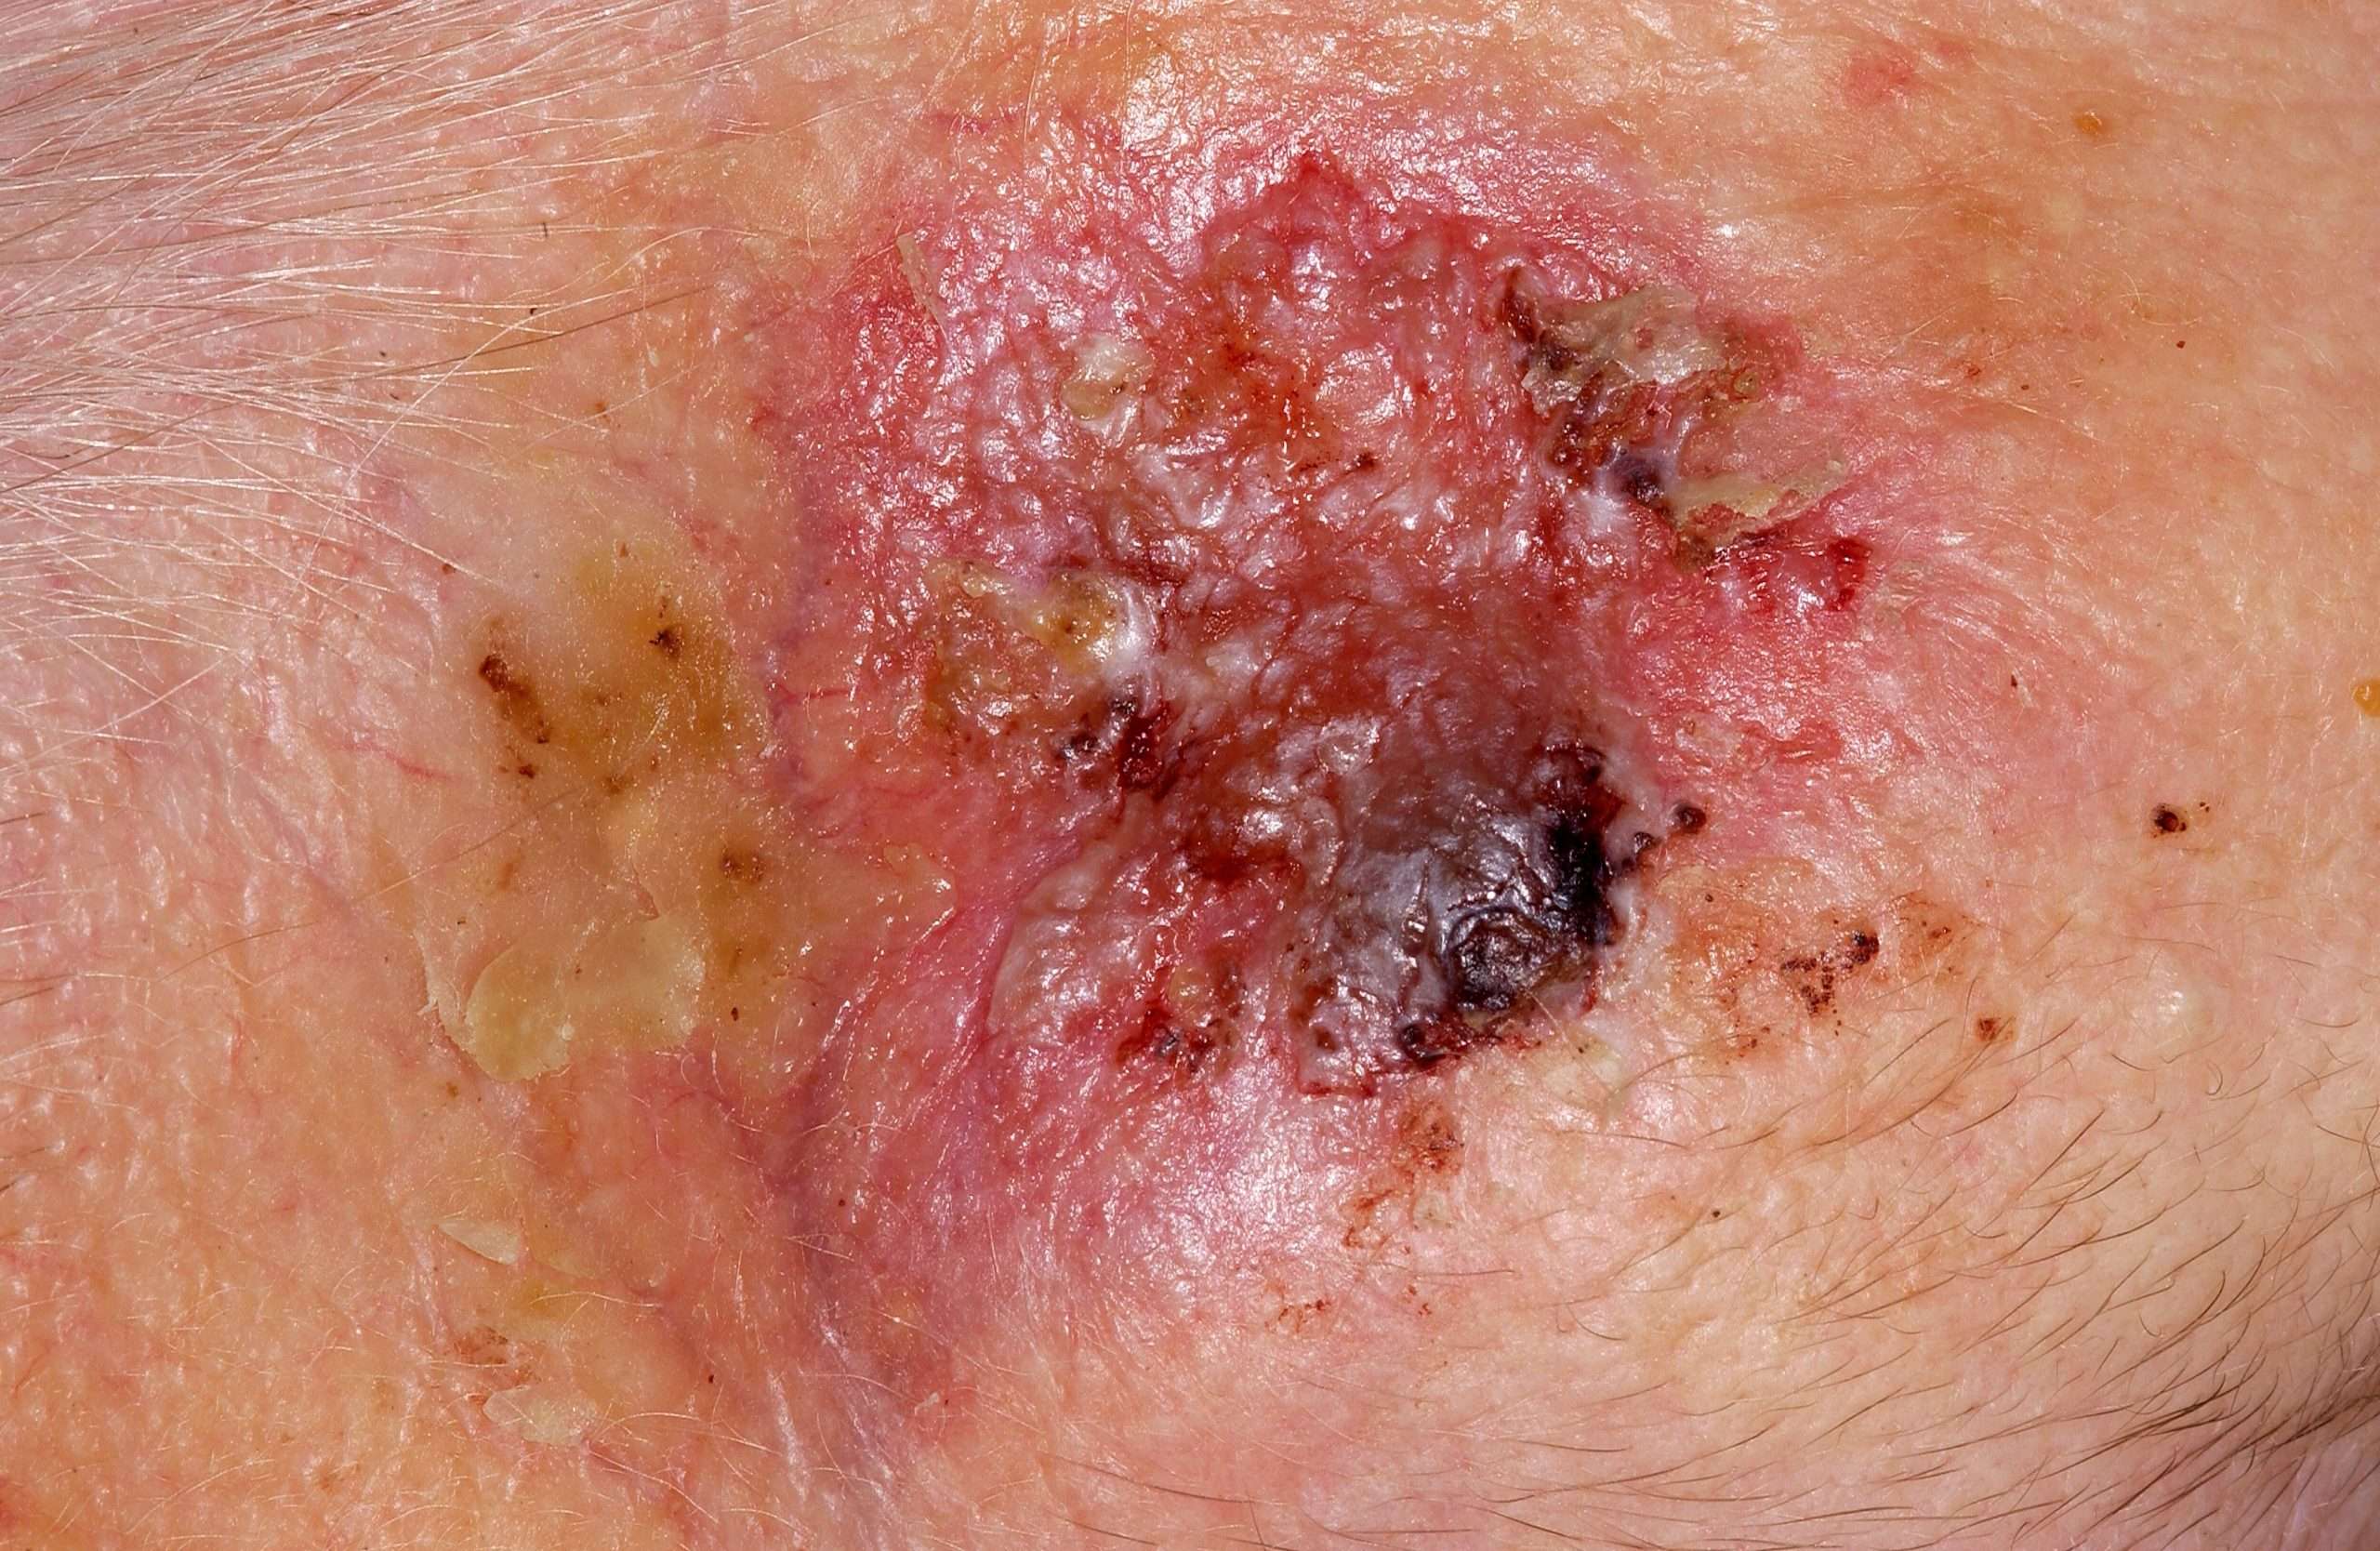 Igarni: Pre Skin Cancer Pictures